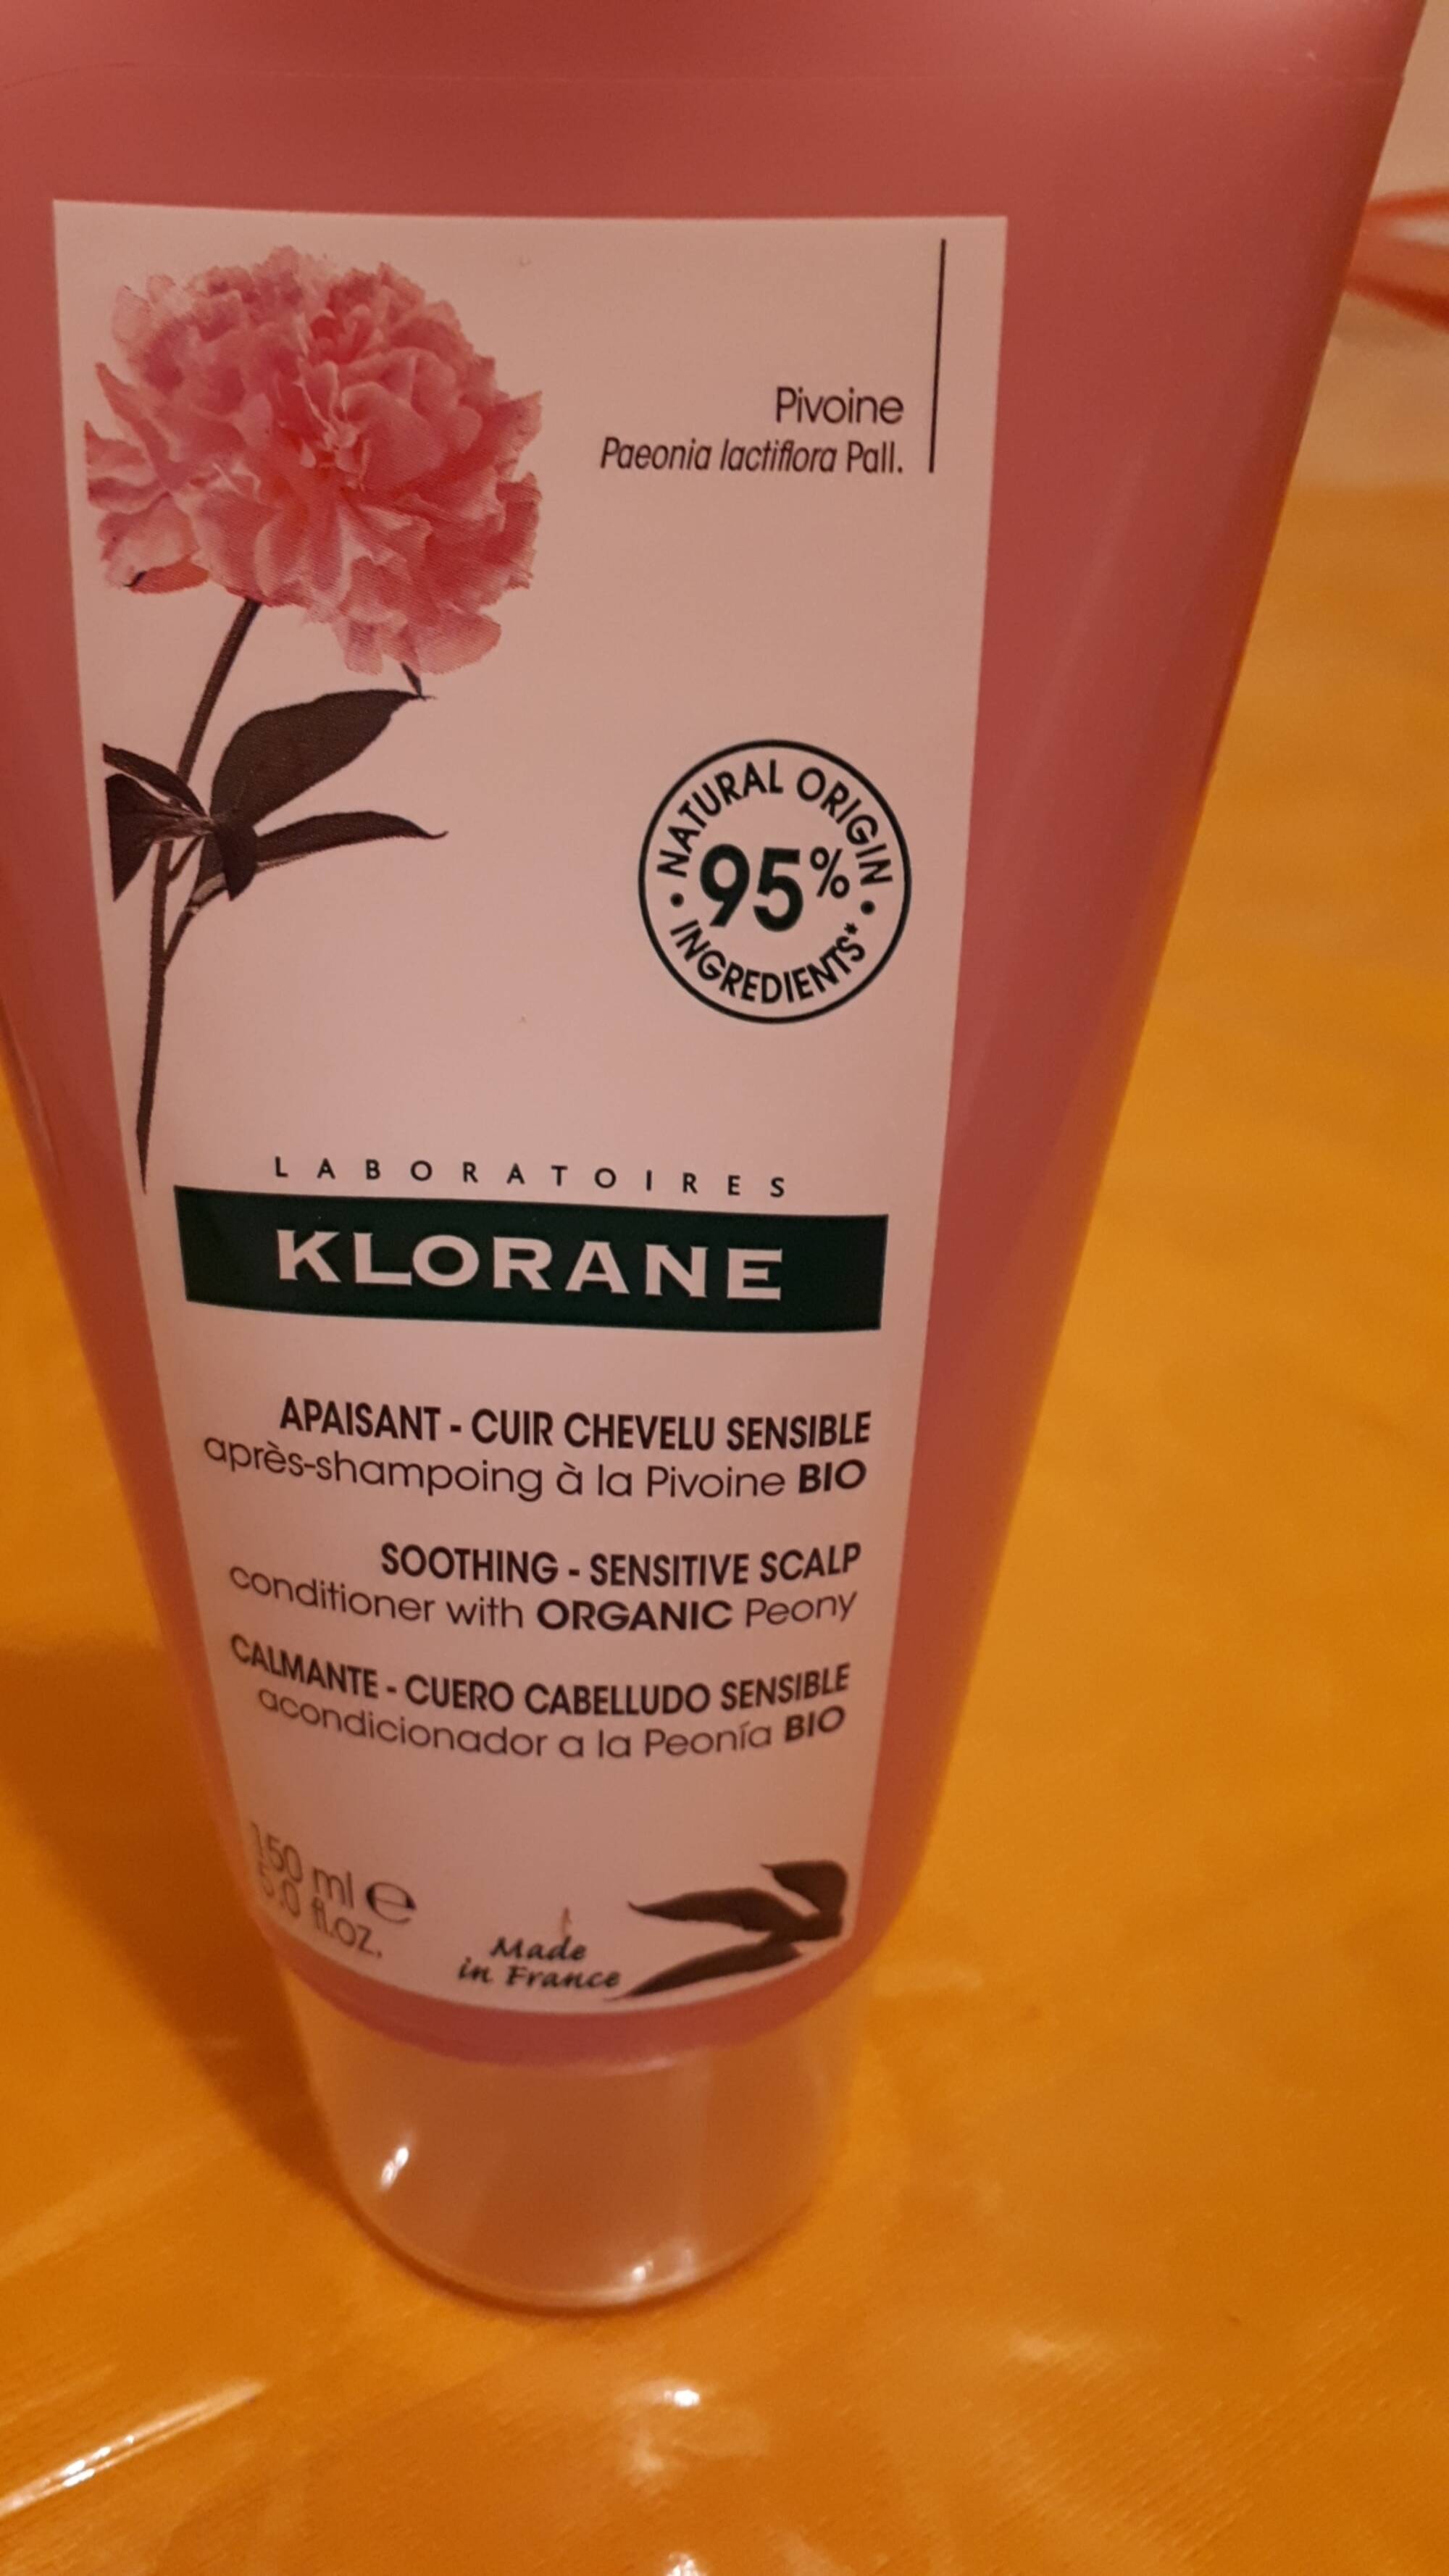 KLORANE - Après shampooing à la pivoine bio